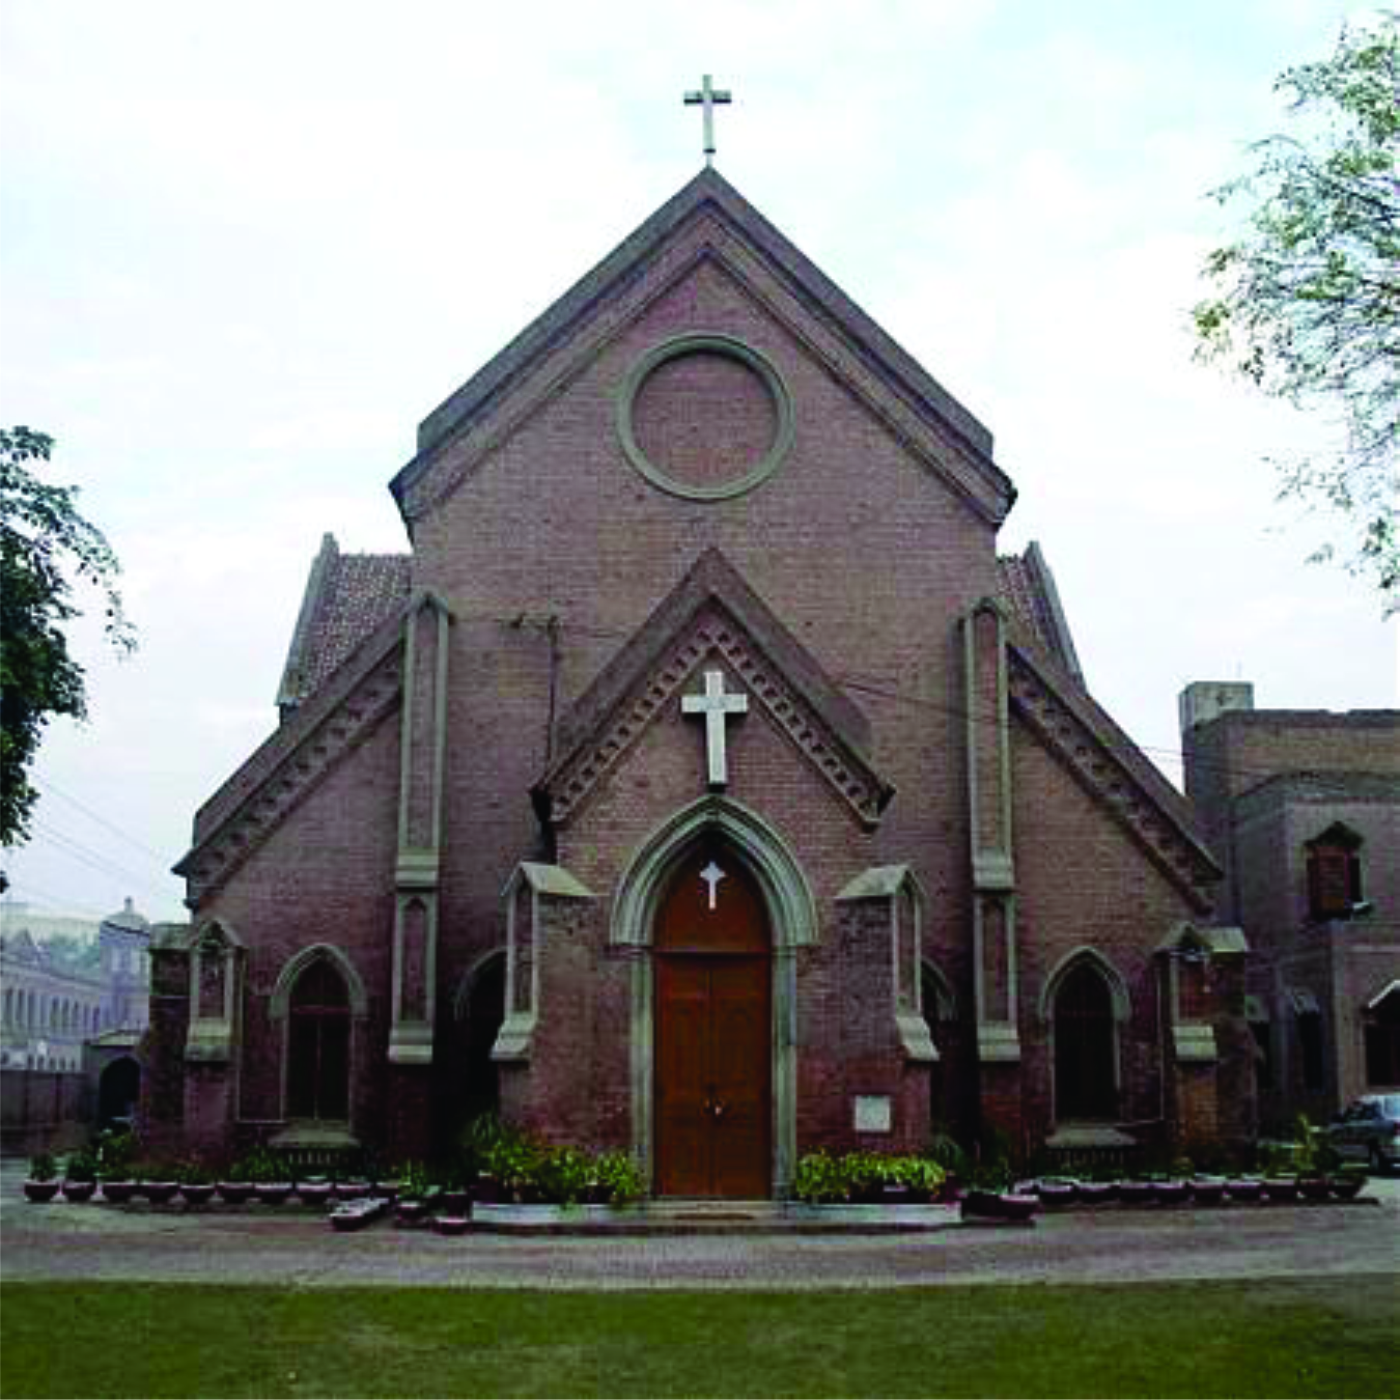 ST. ANDREWS CHURCH